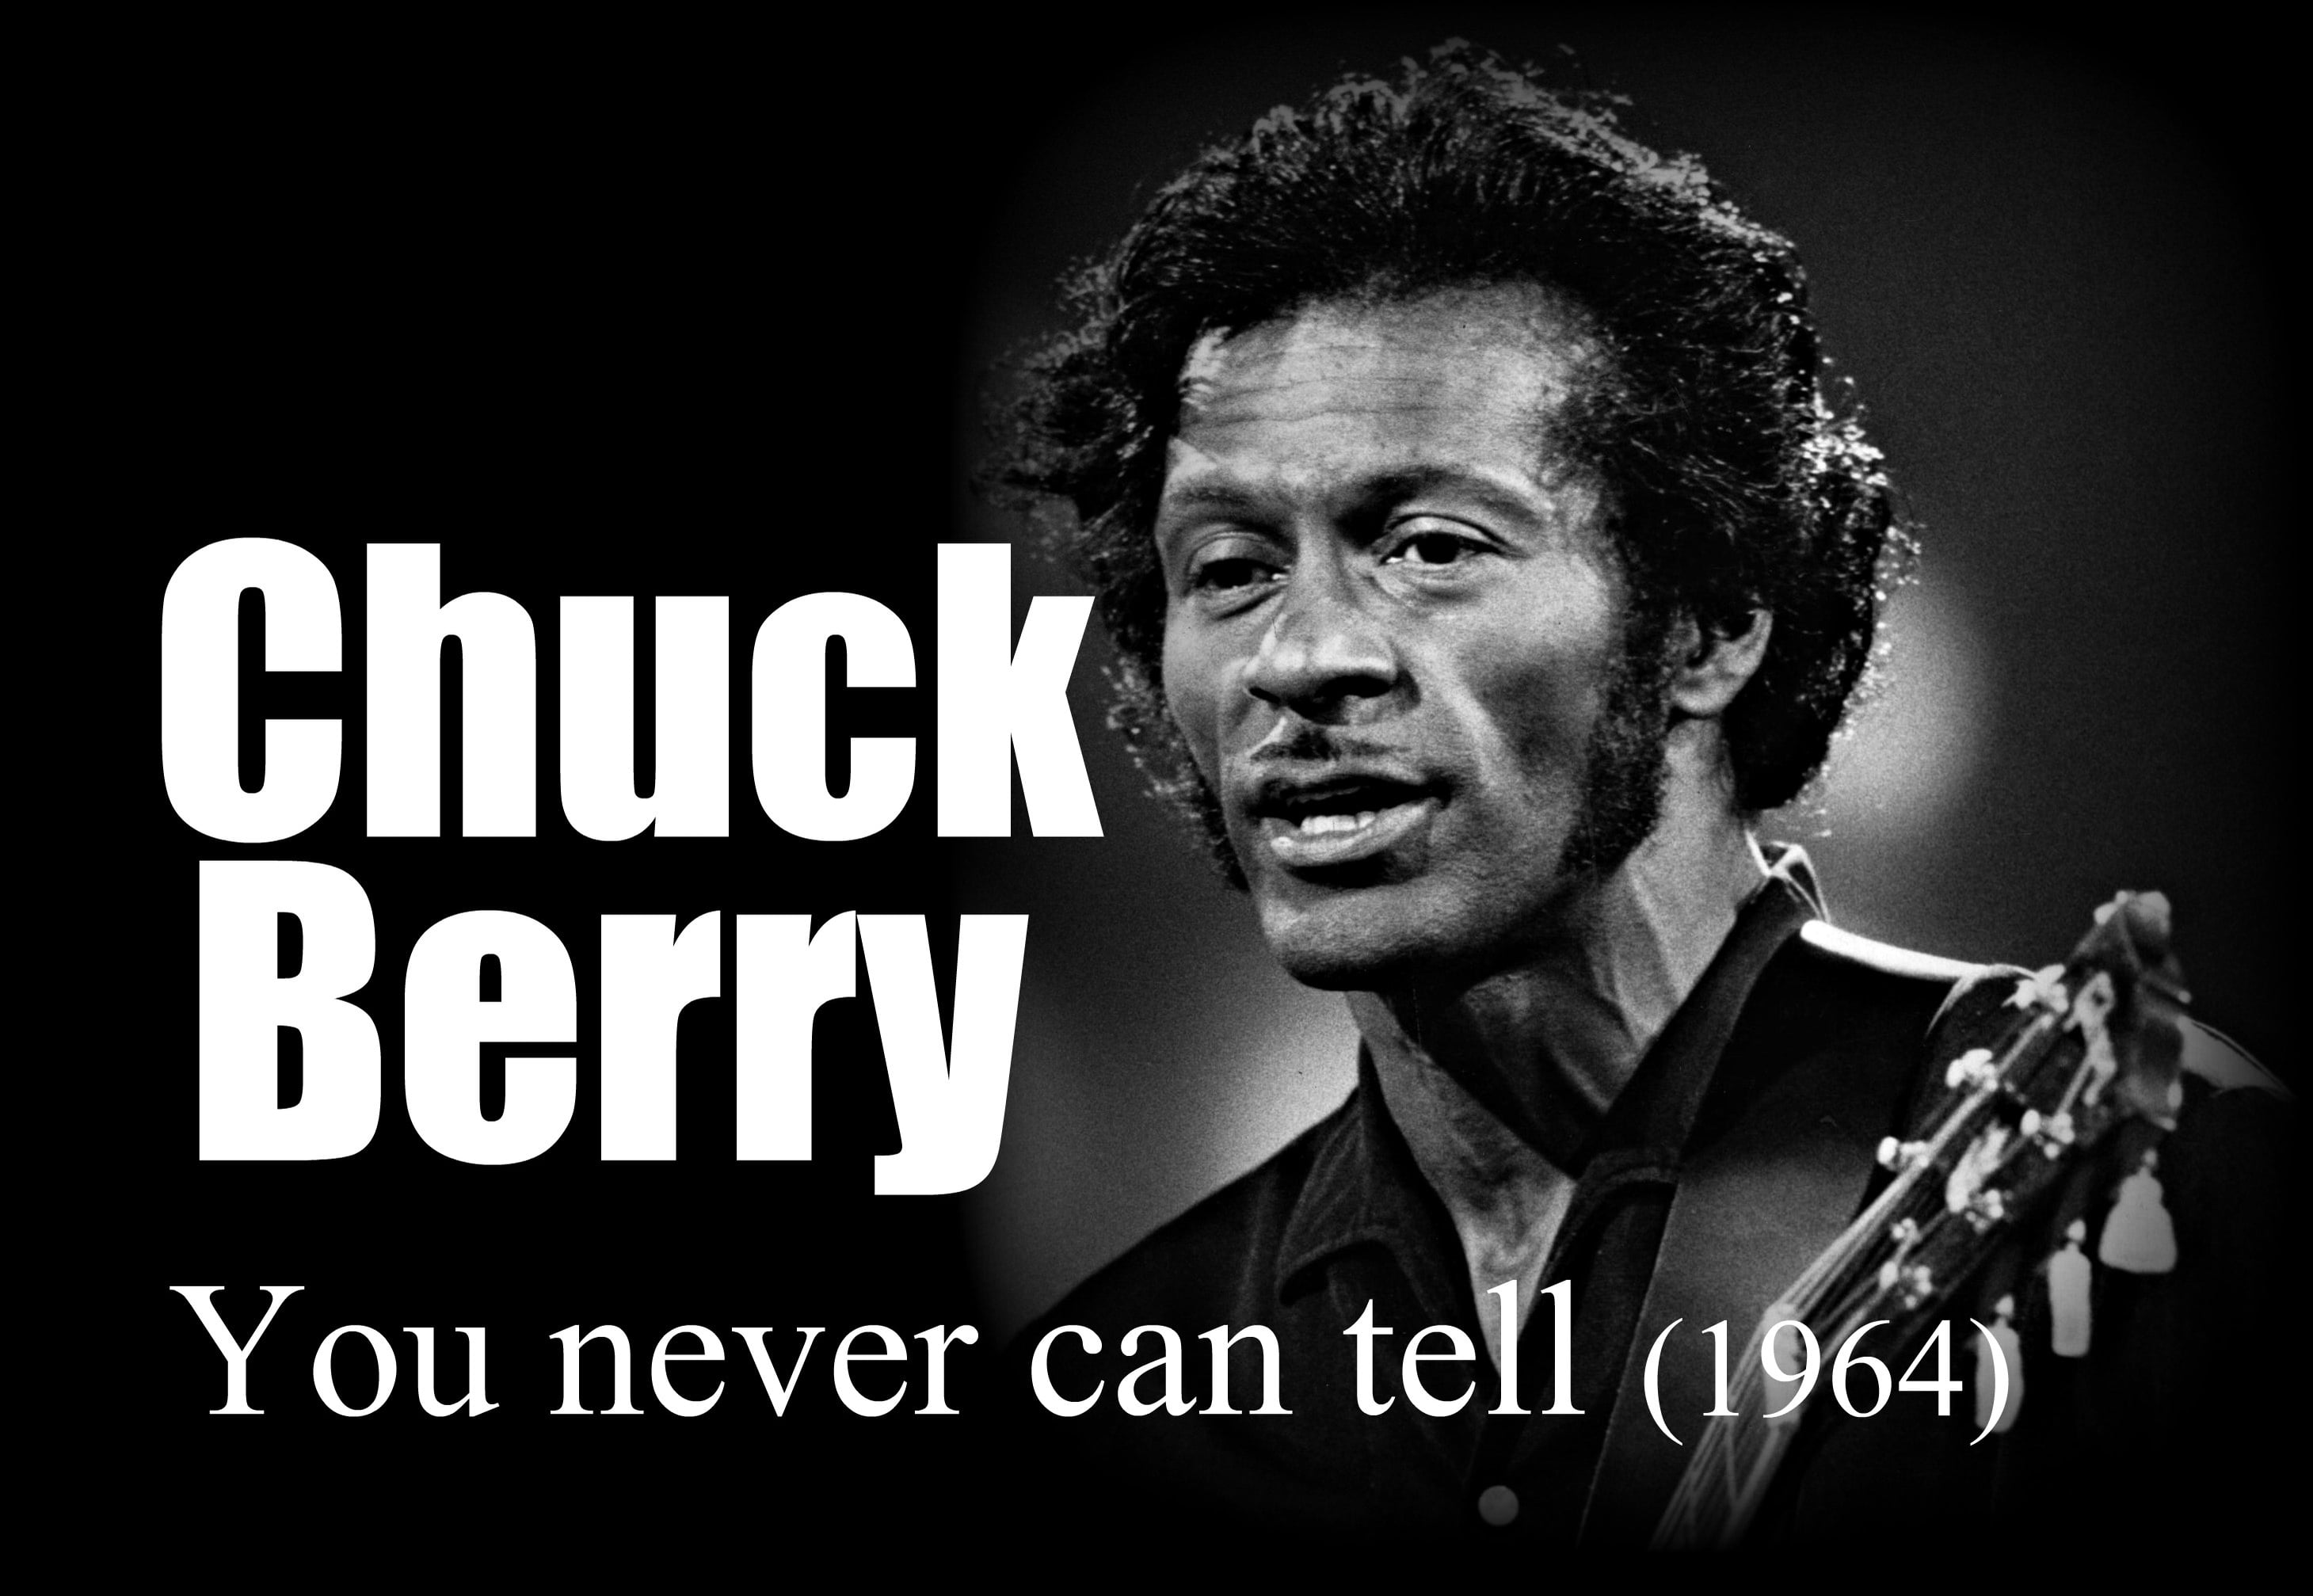 Chuck berry fetish